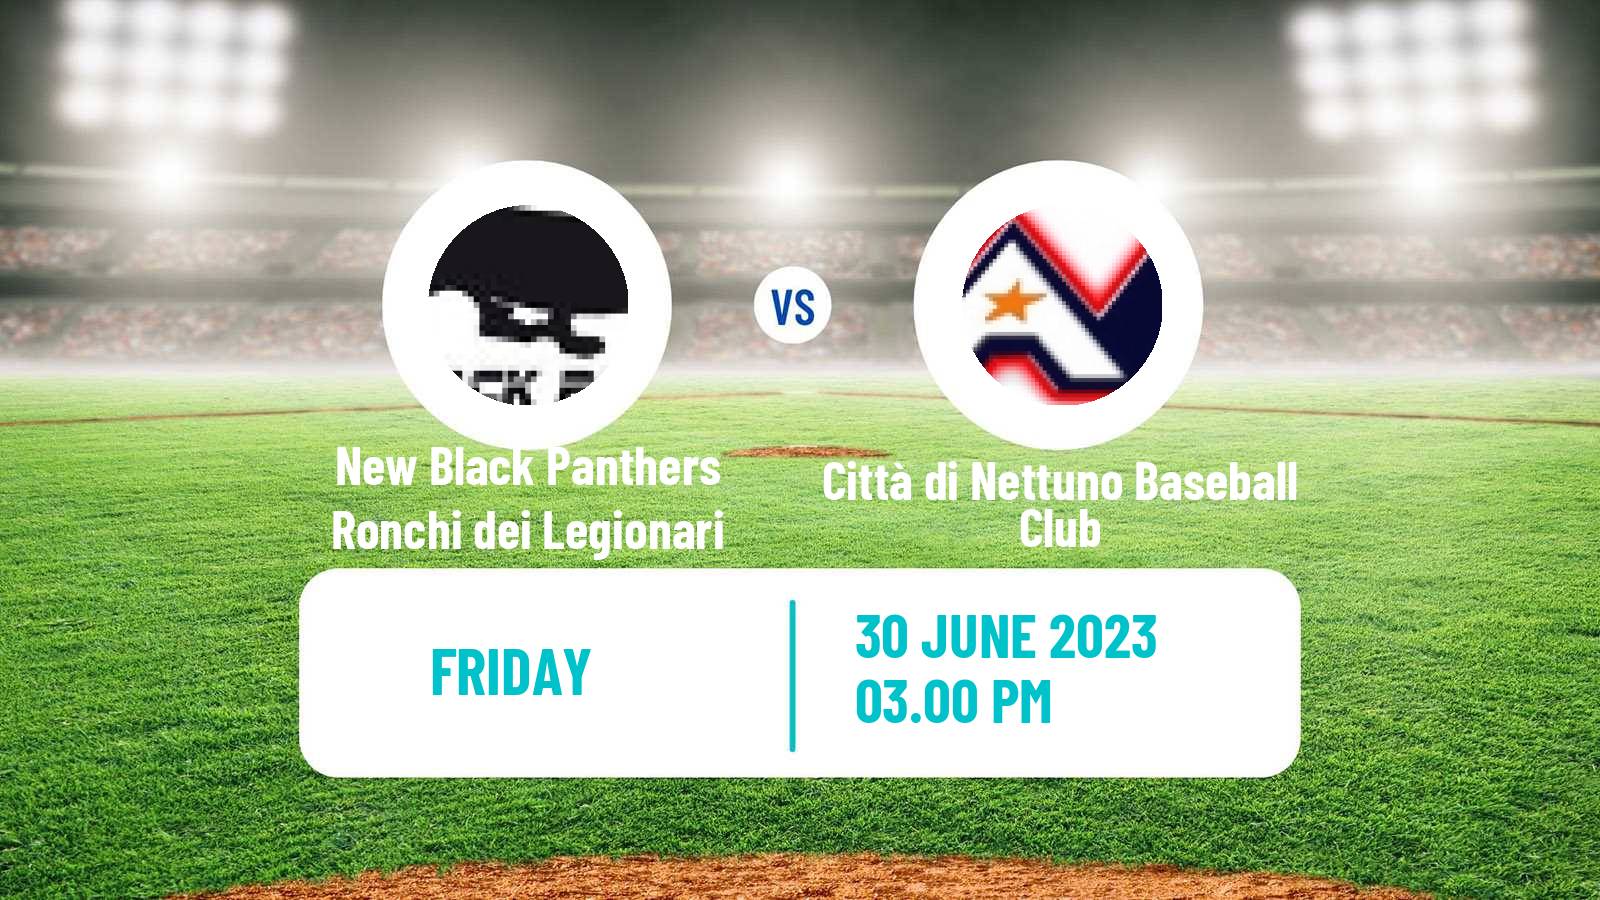 Baseball Italian Serie A1 Baseball New Black Panthers Ronchi dei Legionari - Città di Nettuno Baseball Club